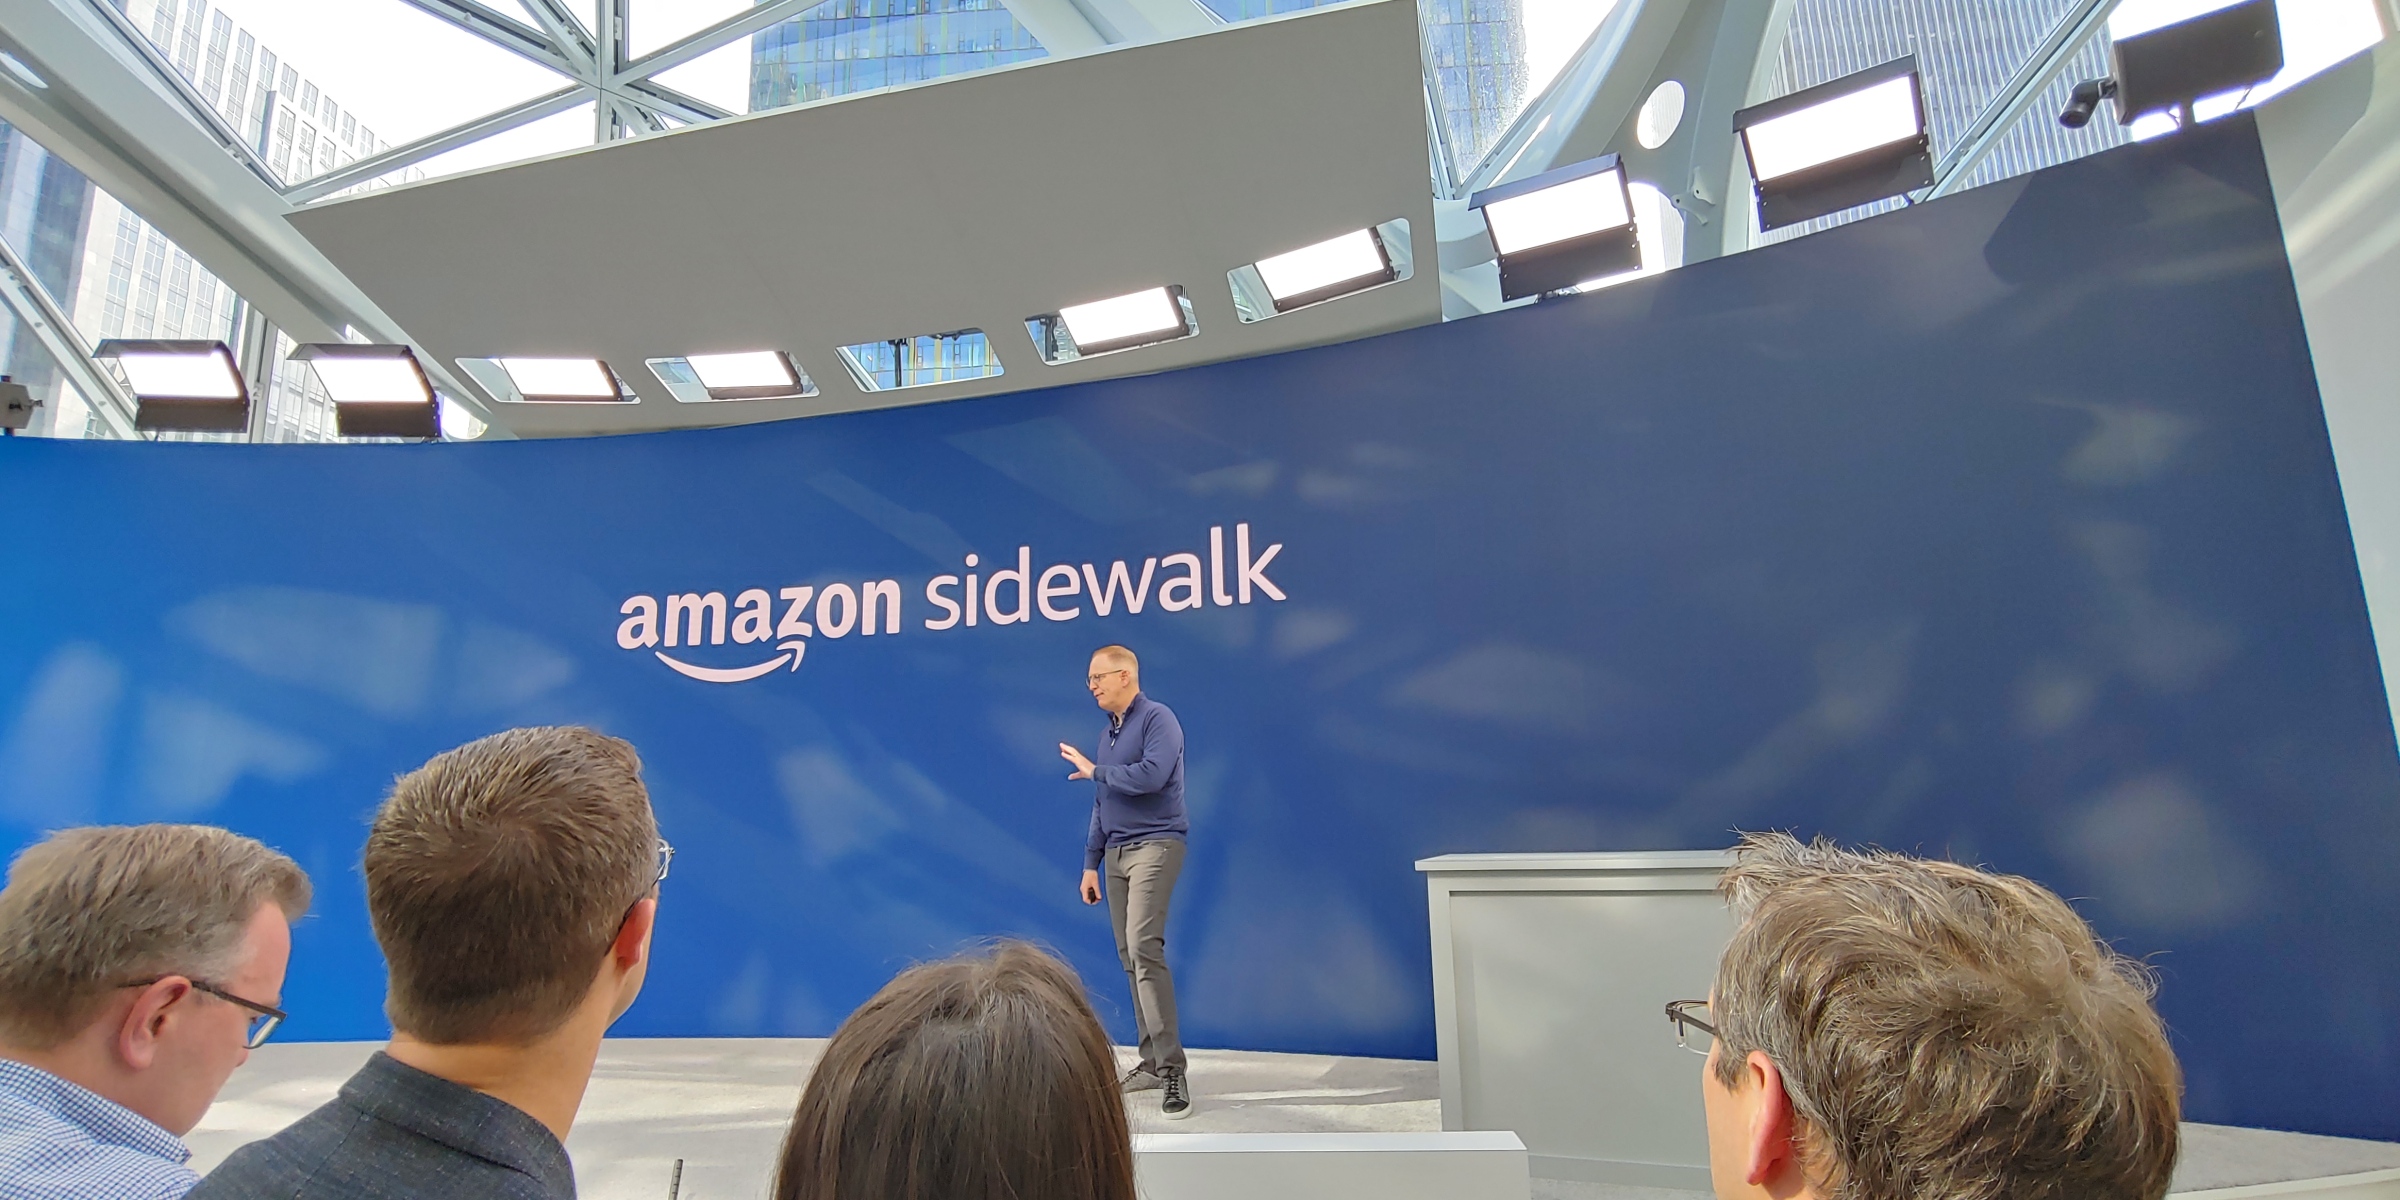 Amazon Sidewalk Is Much More Than a Wireless Network Program